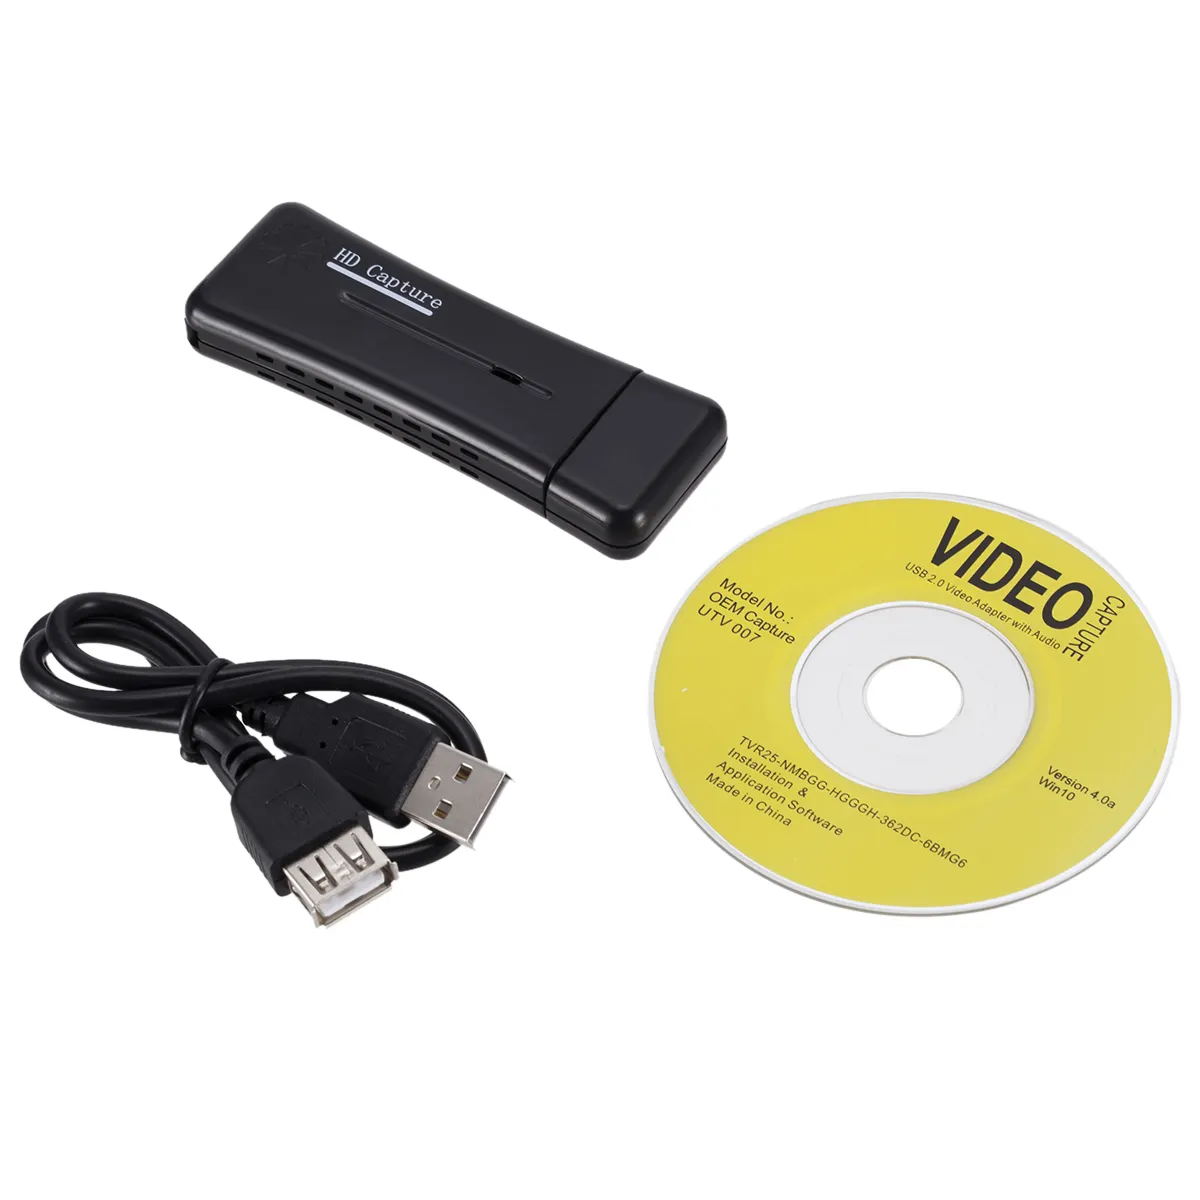 USB 2.0 TV Tuner HD Video Capture Card VCR DVD AV Audio Converter Connector For PC Laptop